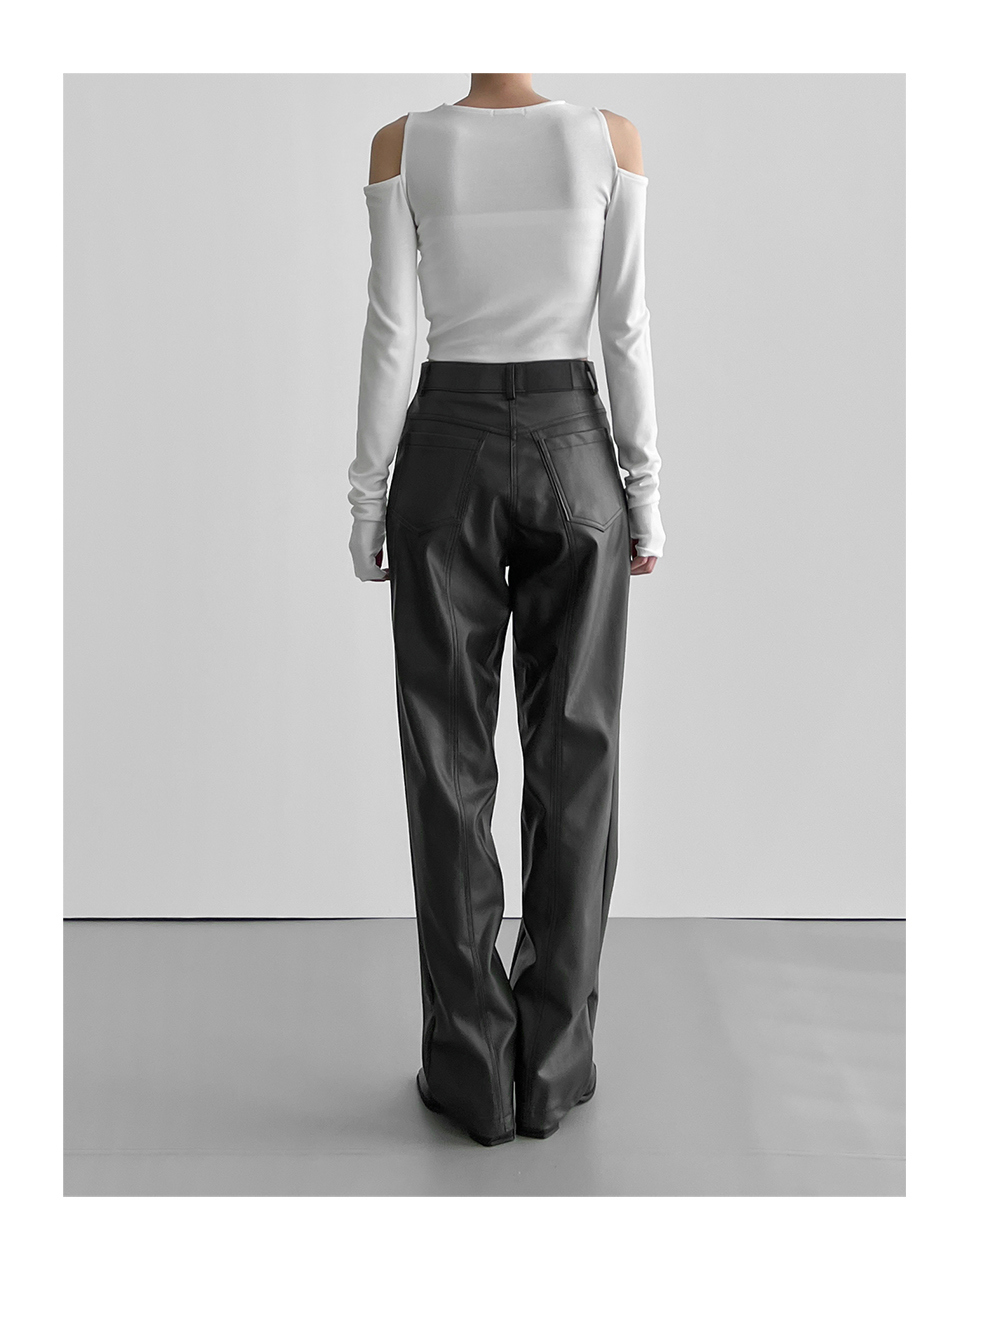 suspenders skirt/pants white color image-S1L12